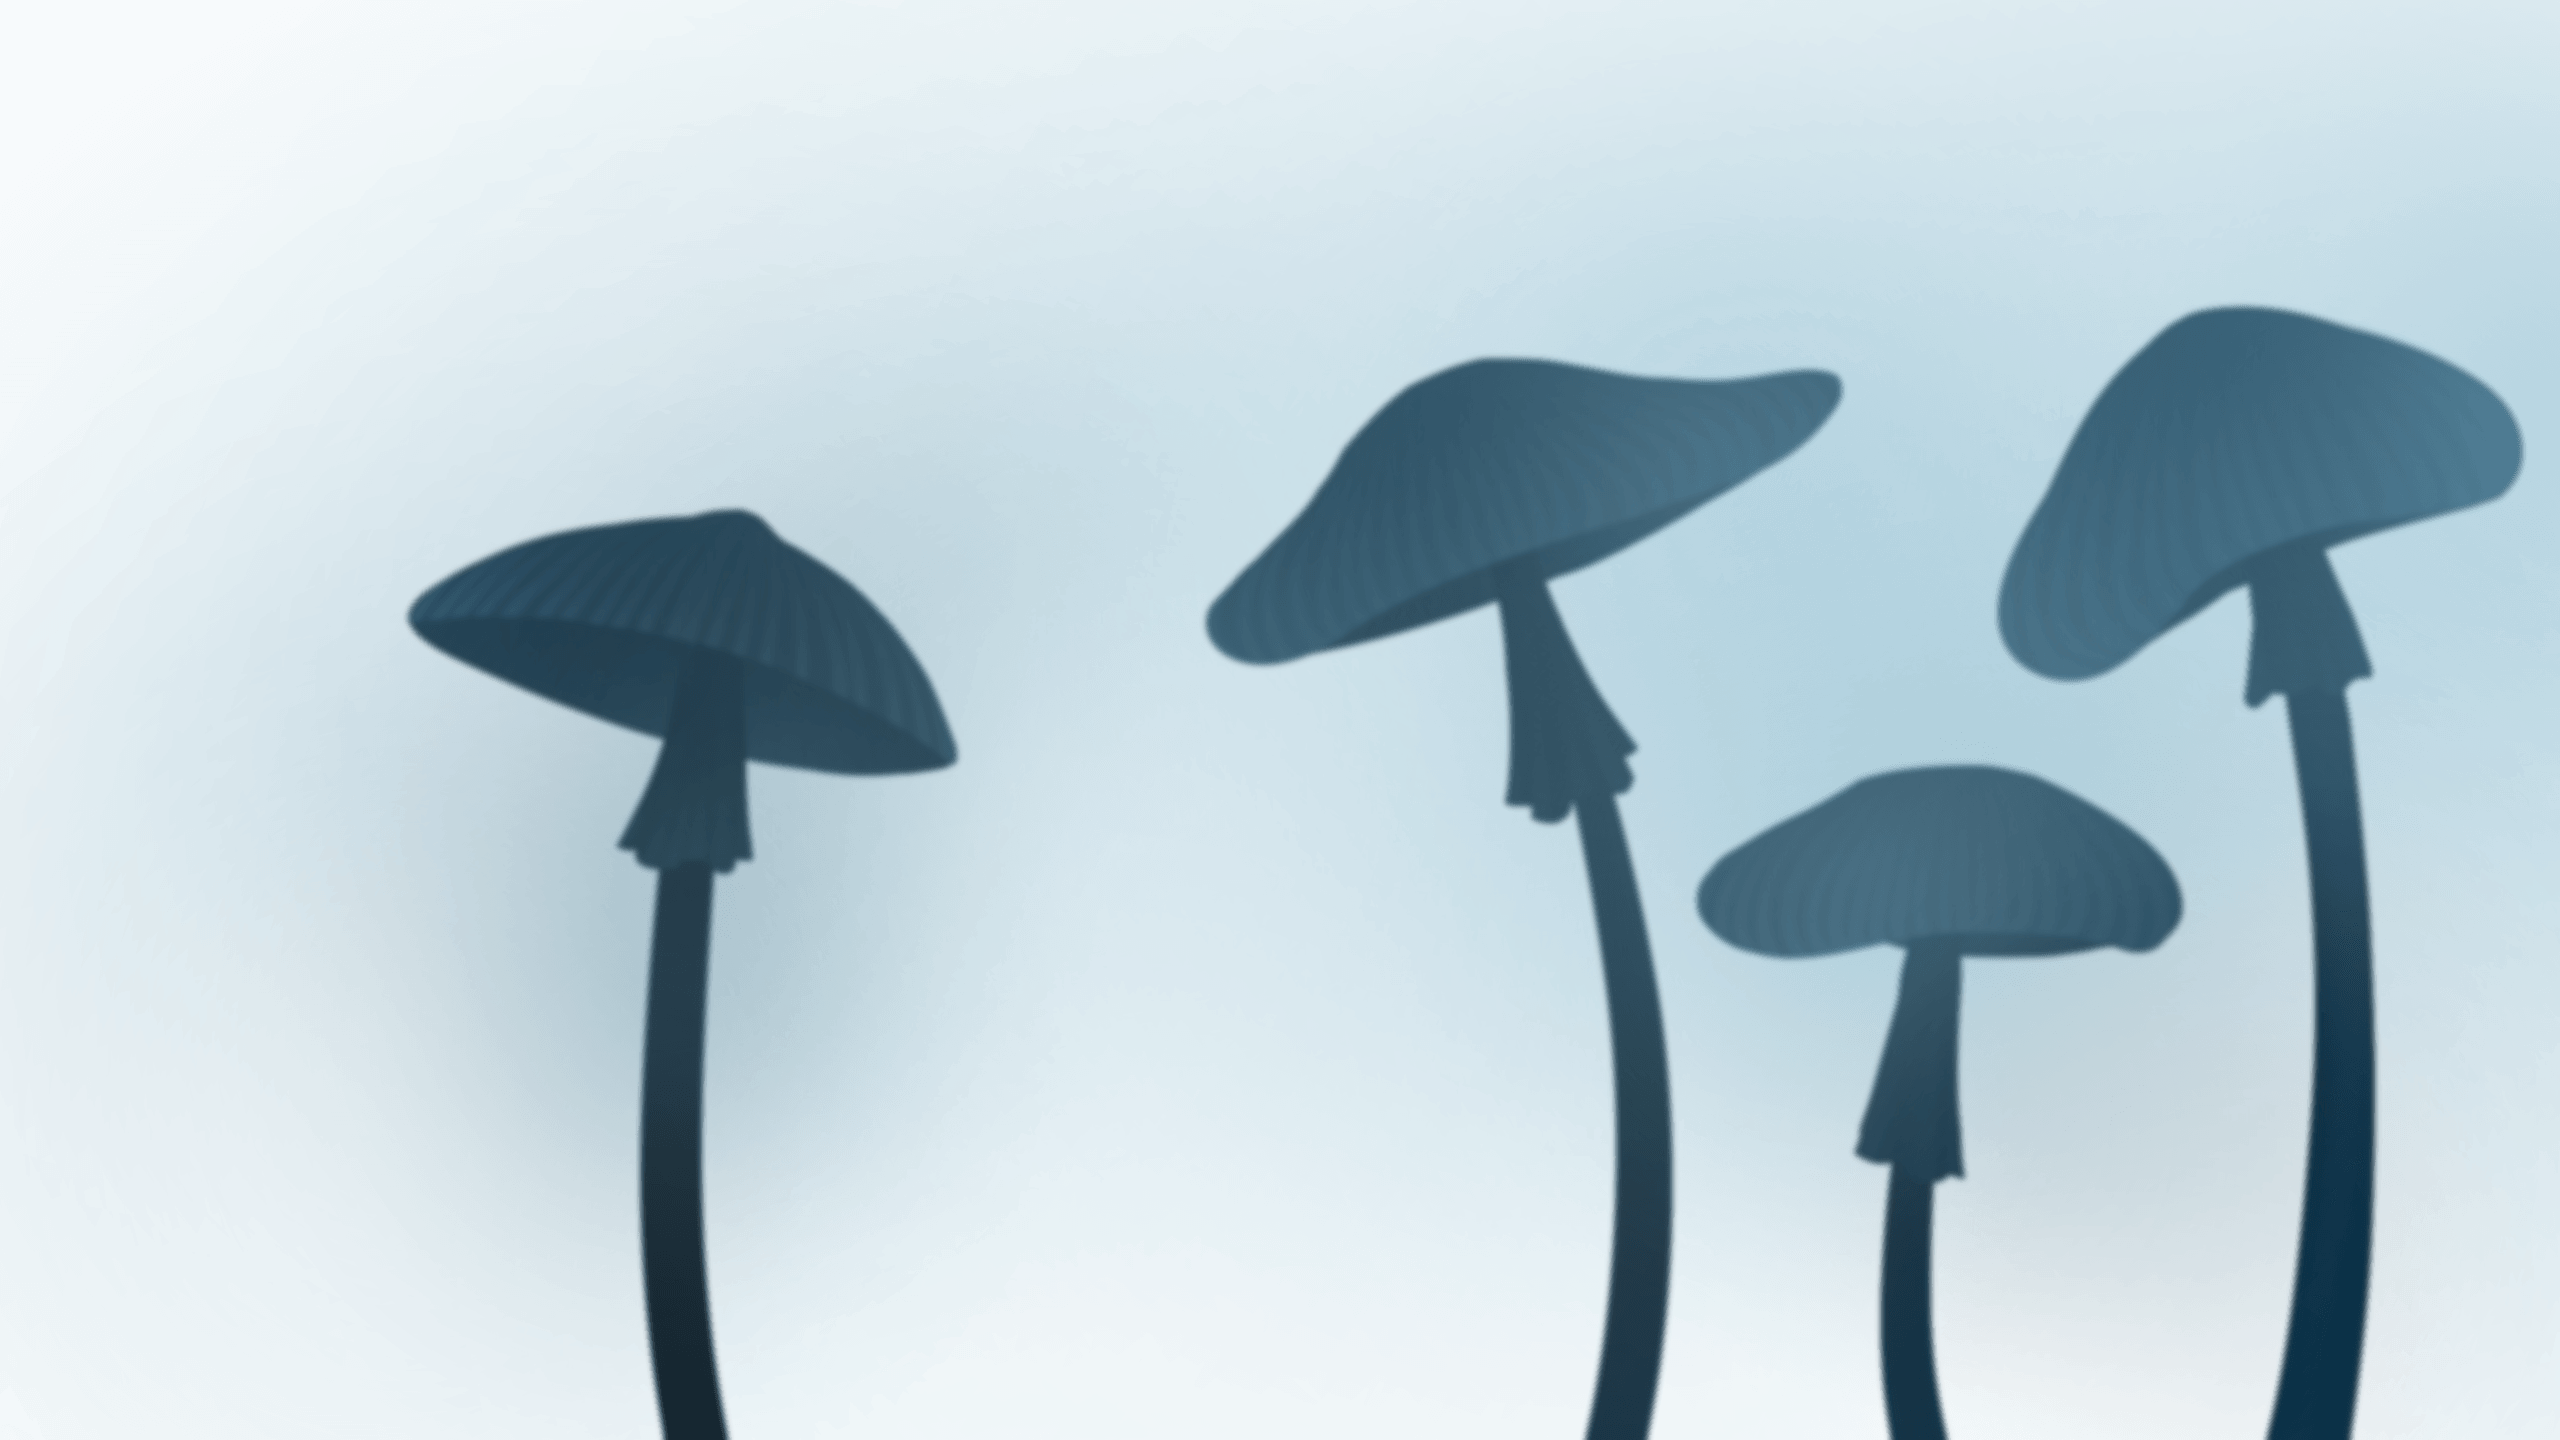 spiritwell ghibli style background mushrooms large